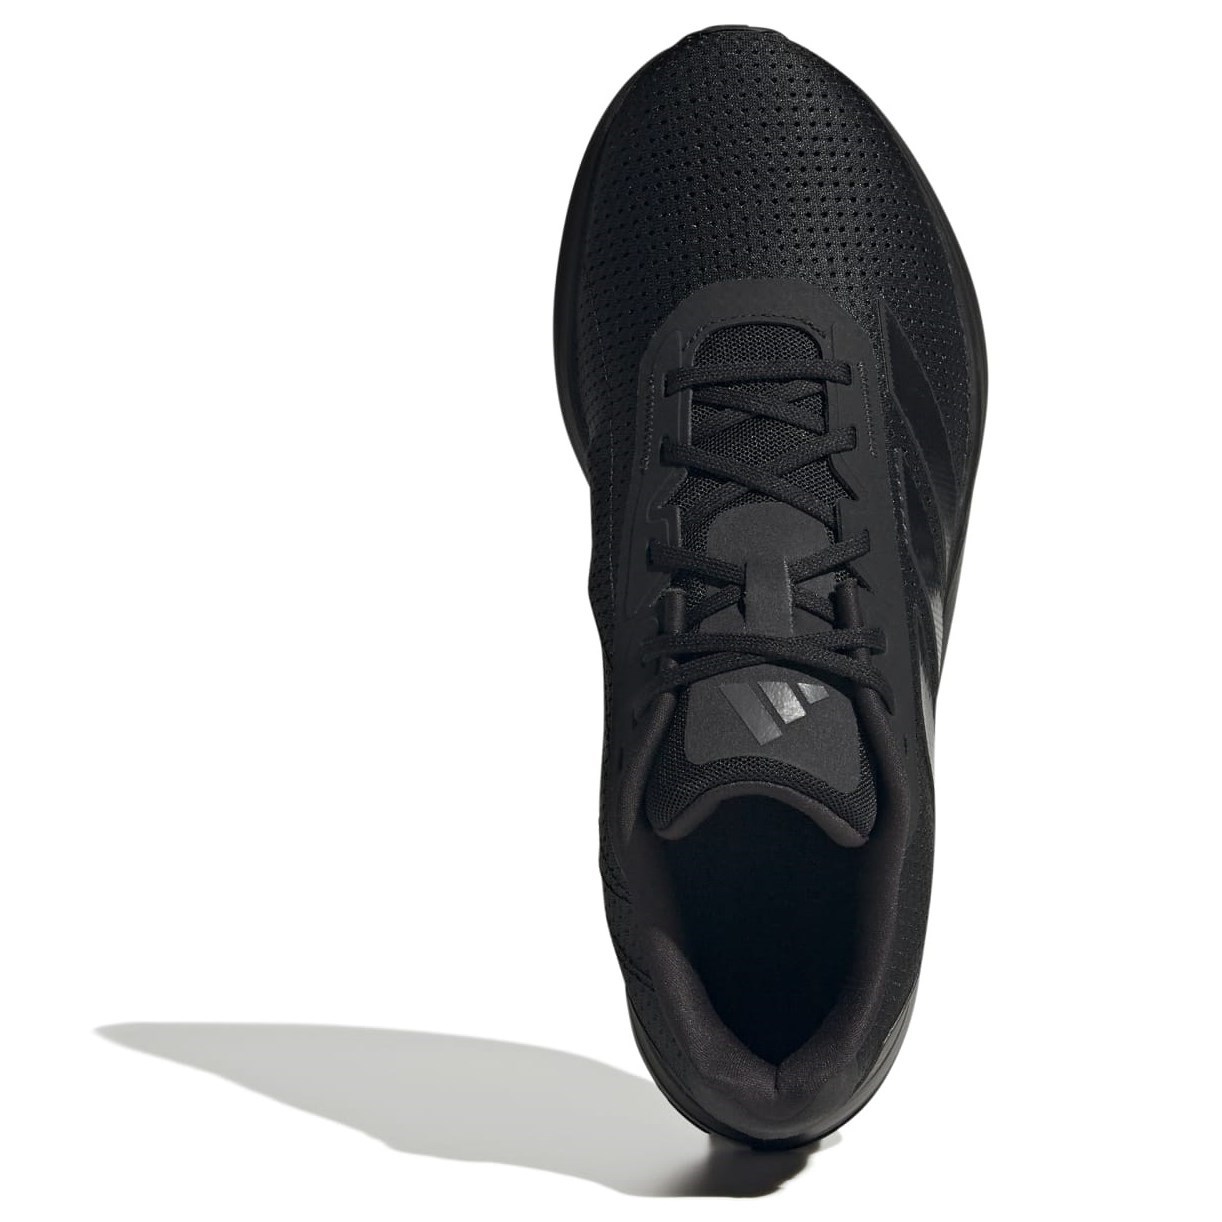 Adidas Duramo SL - Mens Running Shoes - Core Black/Core Black/Cloud ...